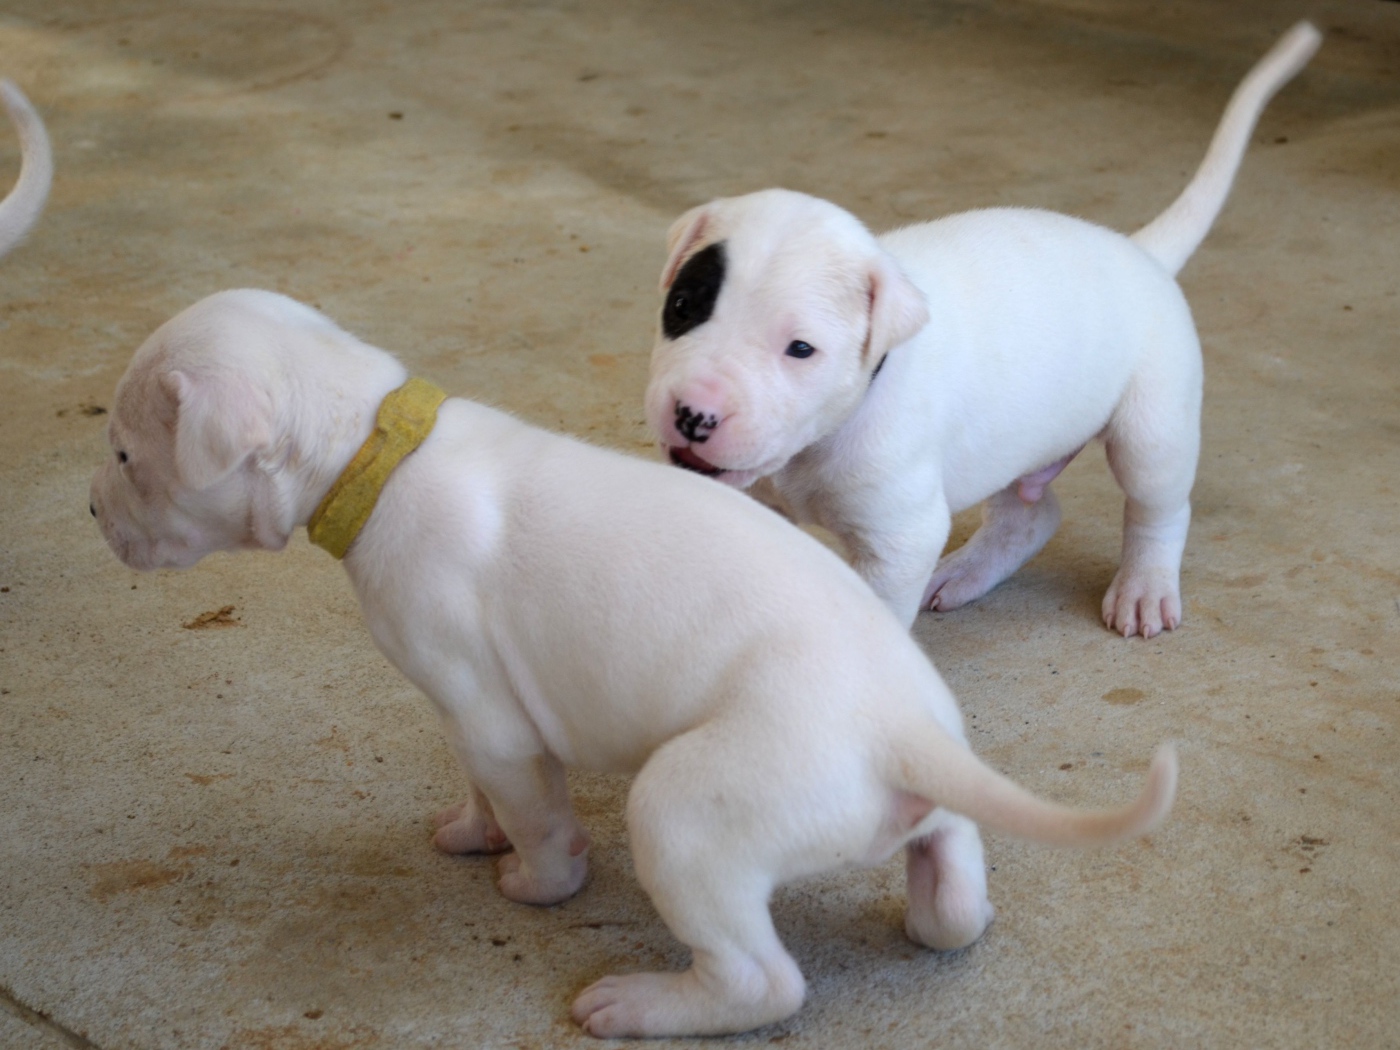 Playful puppies Dogo Argentino